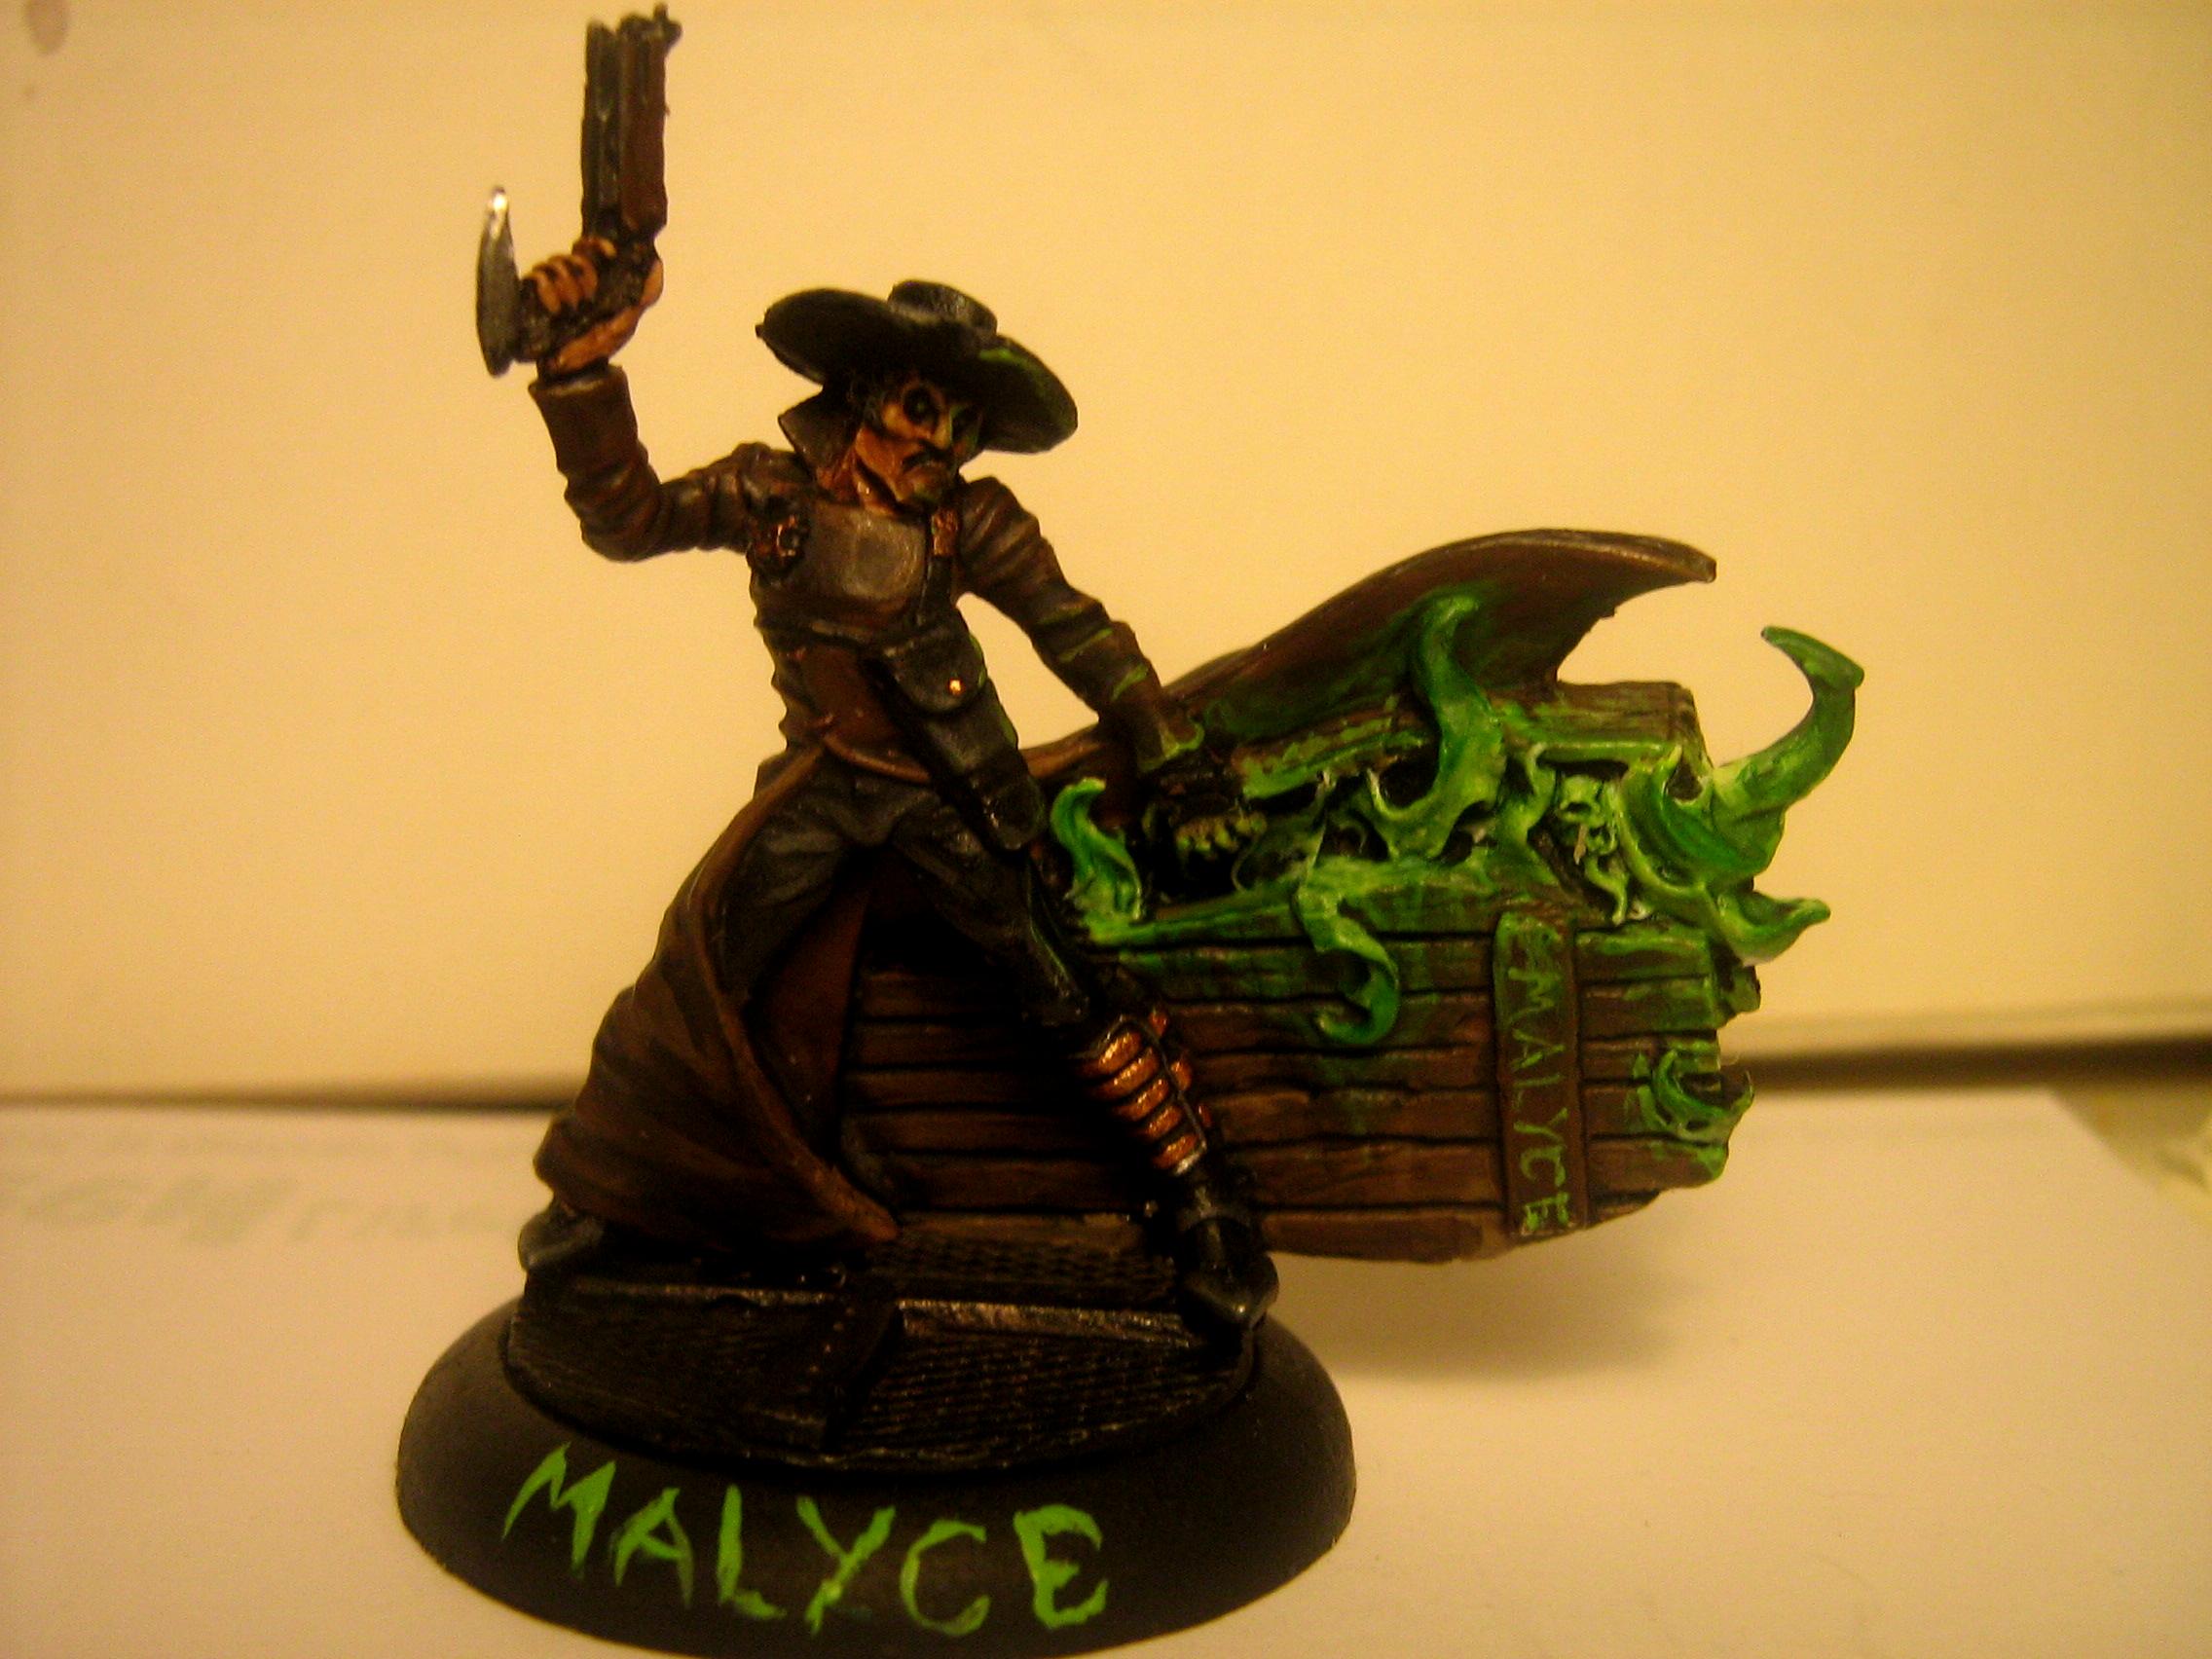 Death Marshall Malyce